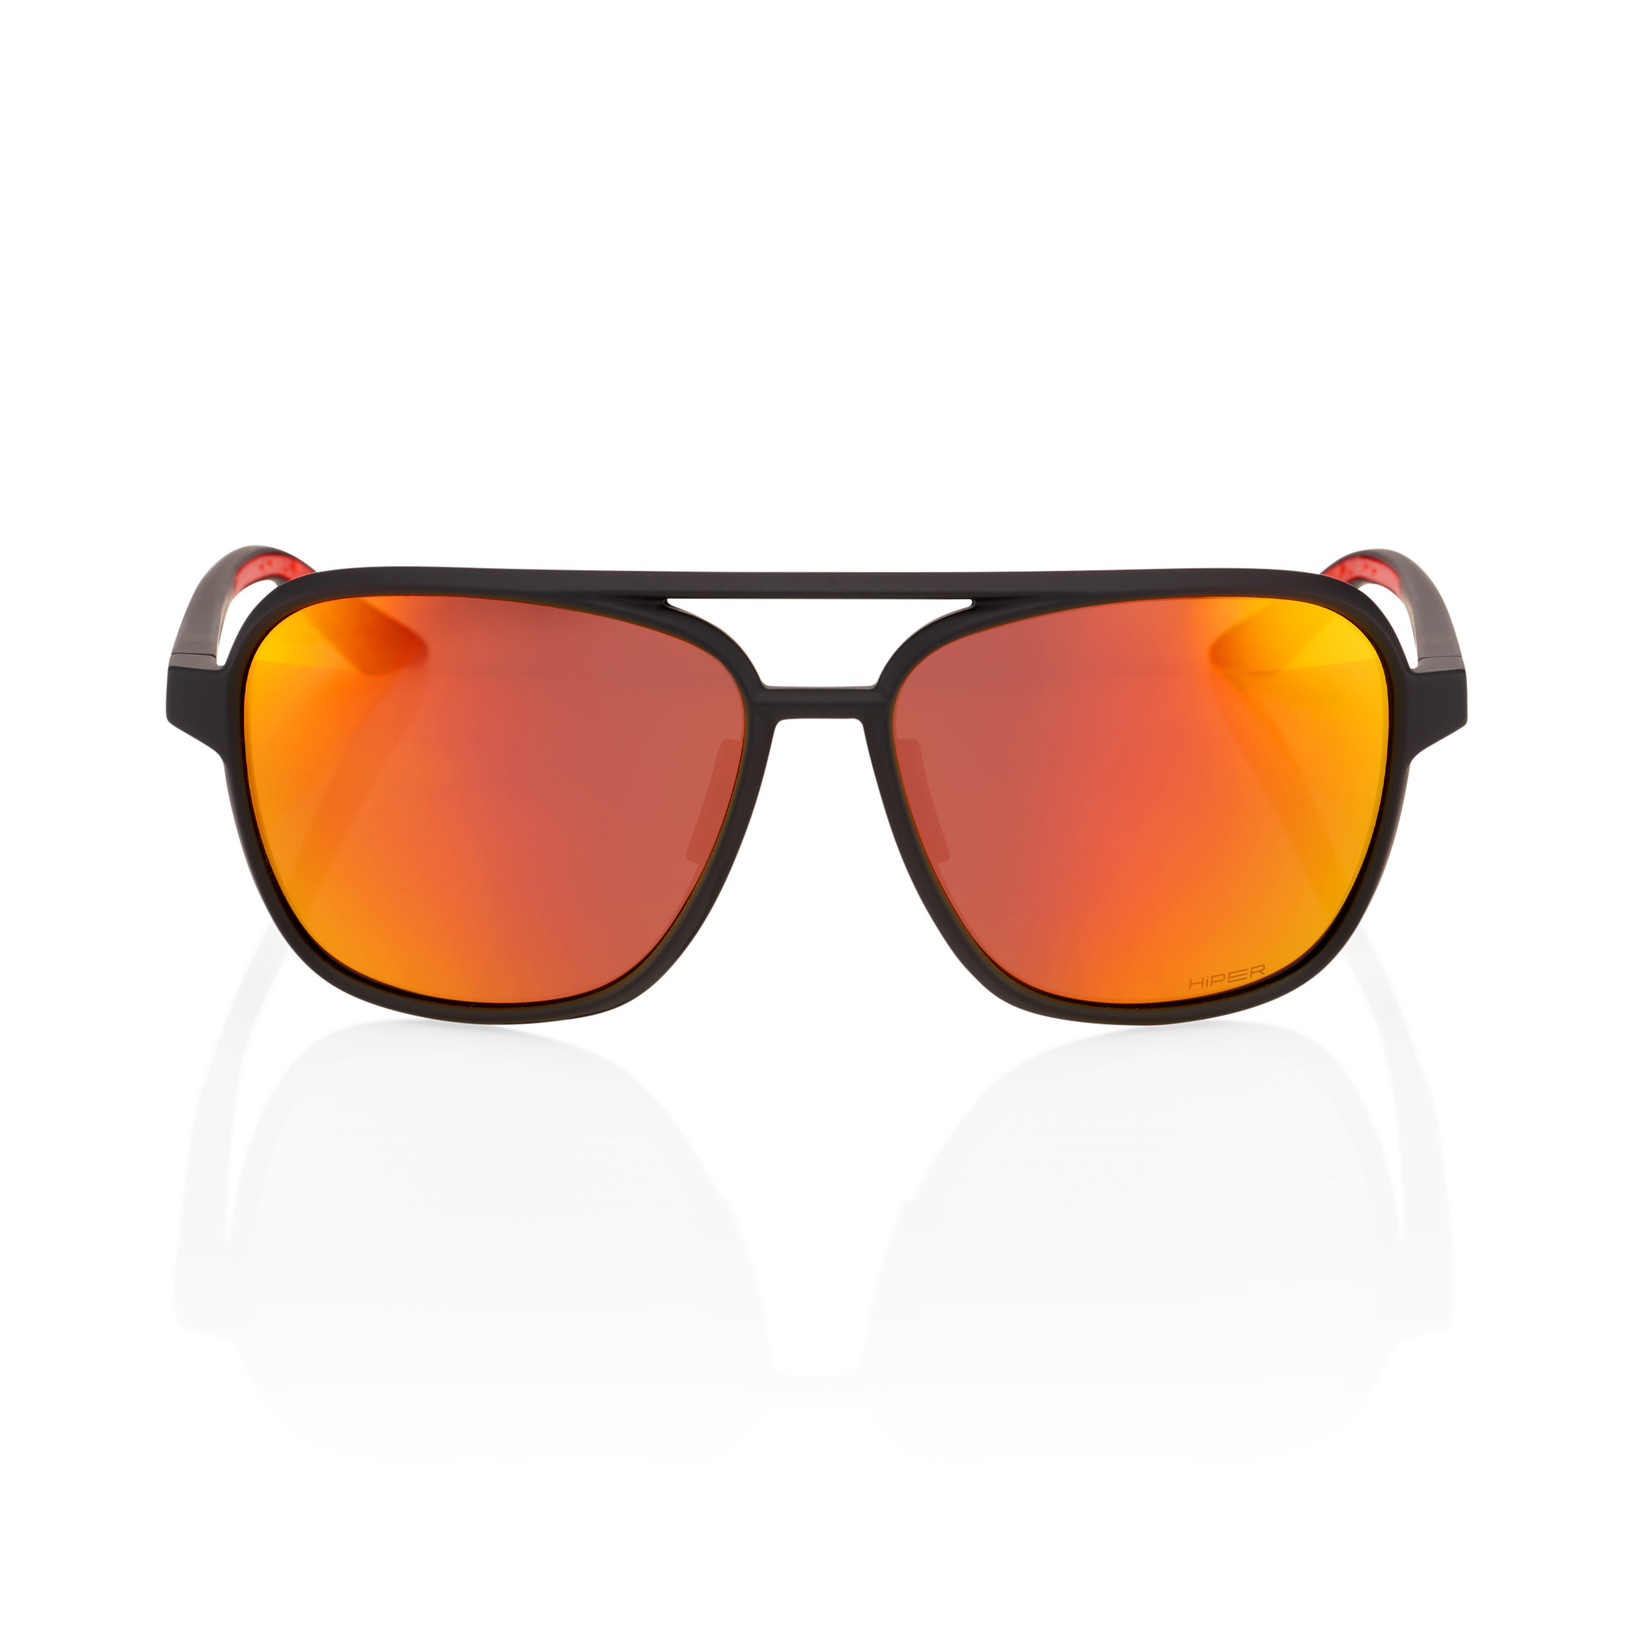 100 Percent 100% Kasia Sunglasses Soft Tact Black-Hiper Red Polycarbonate 100% UV Protection